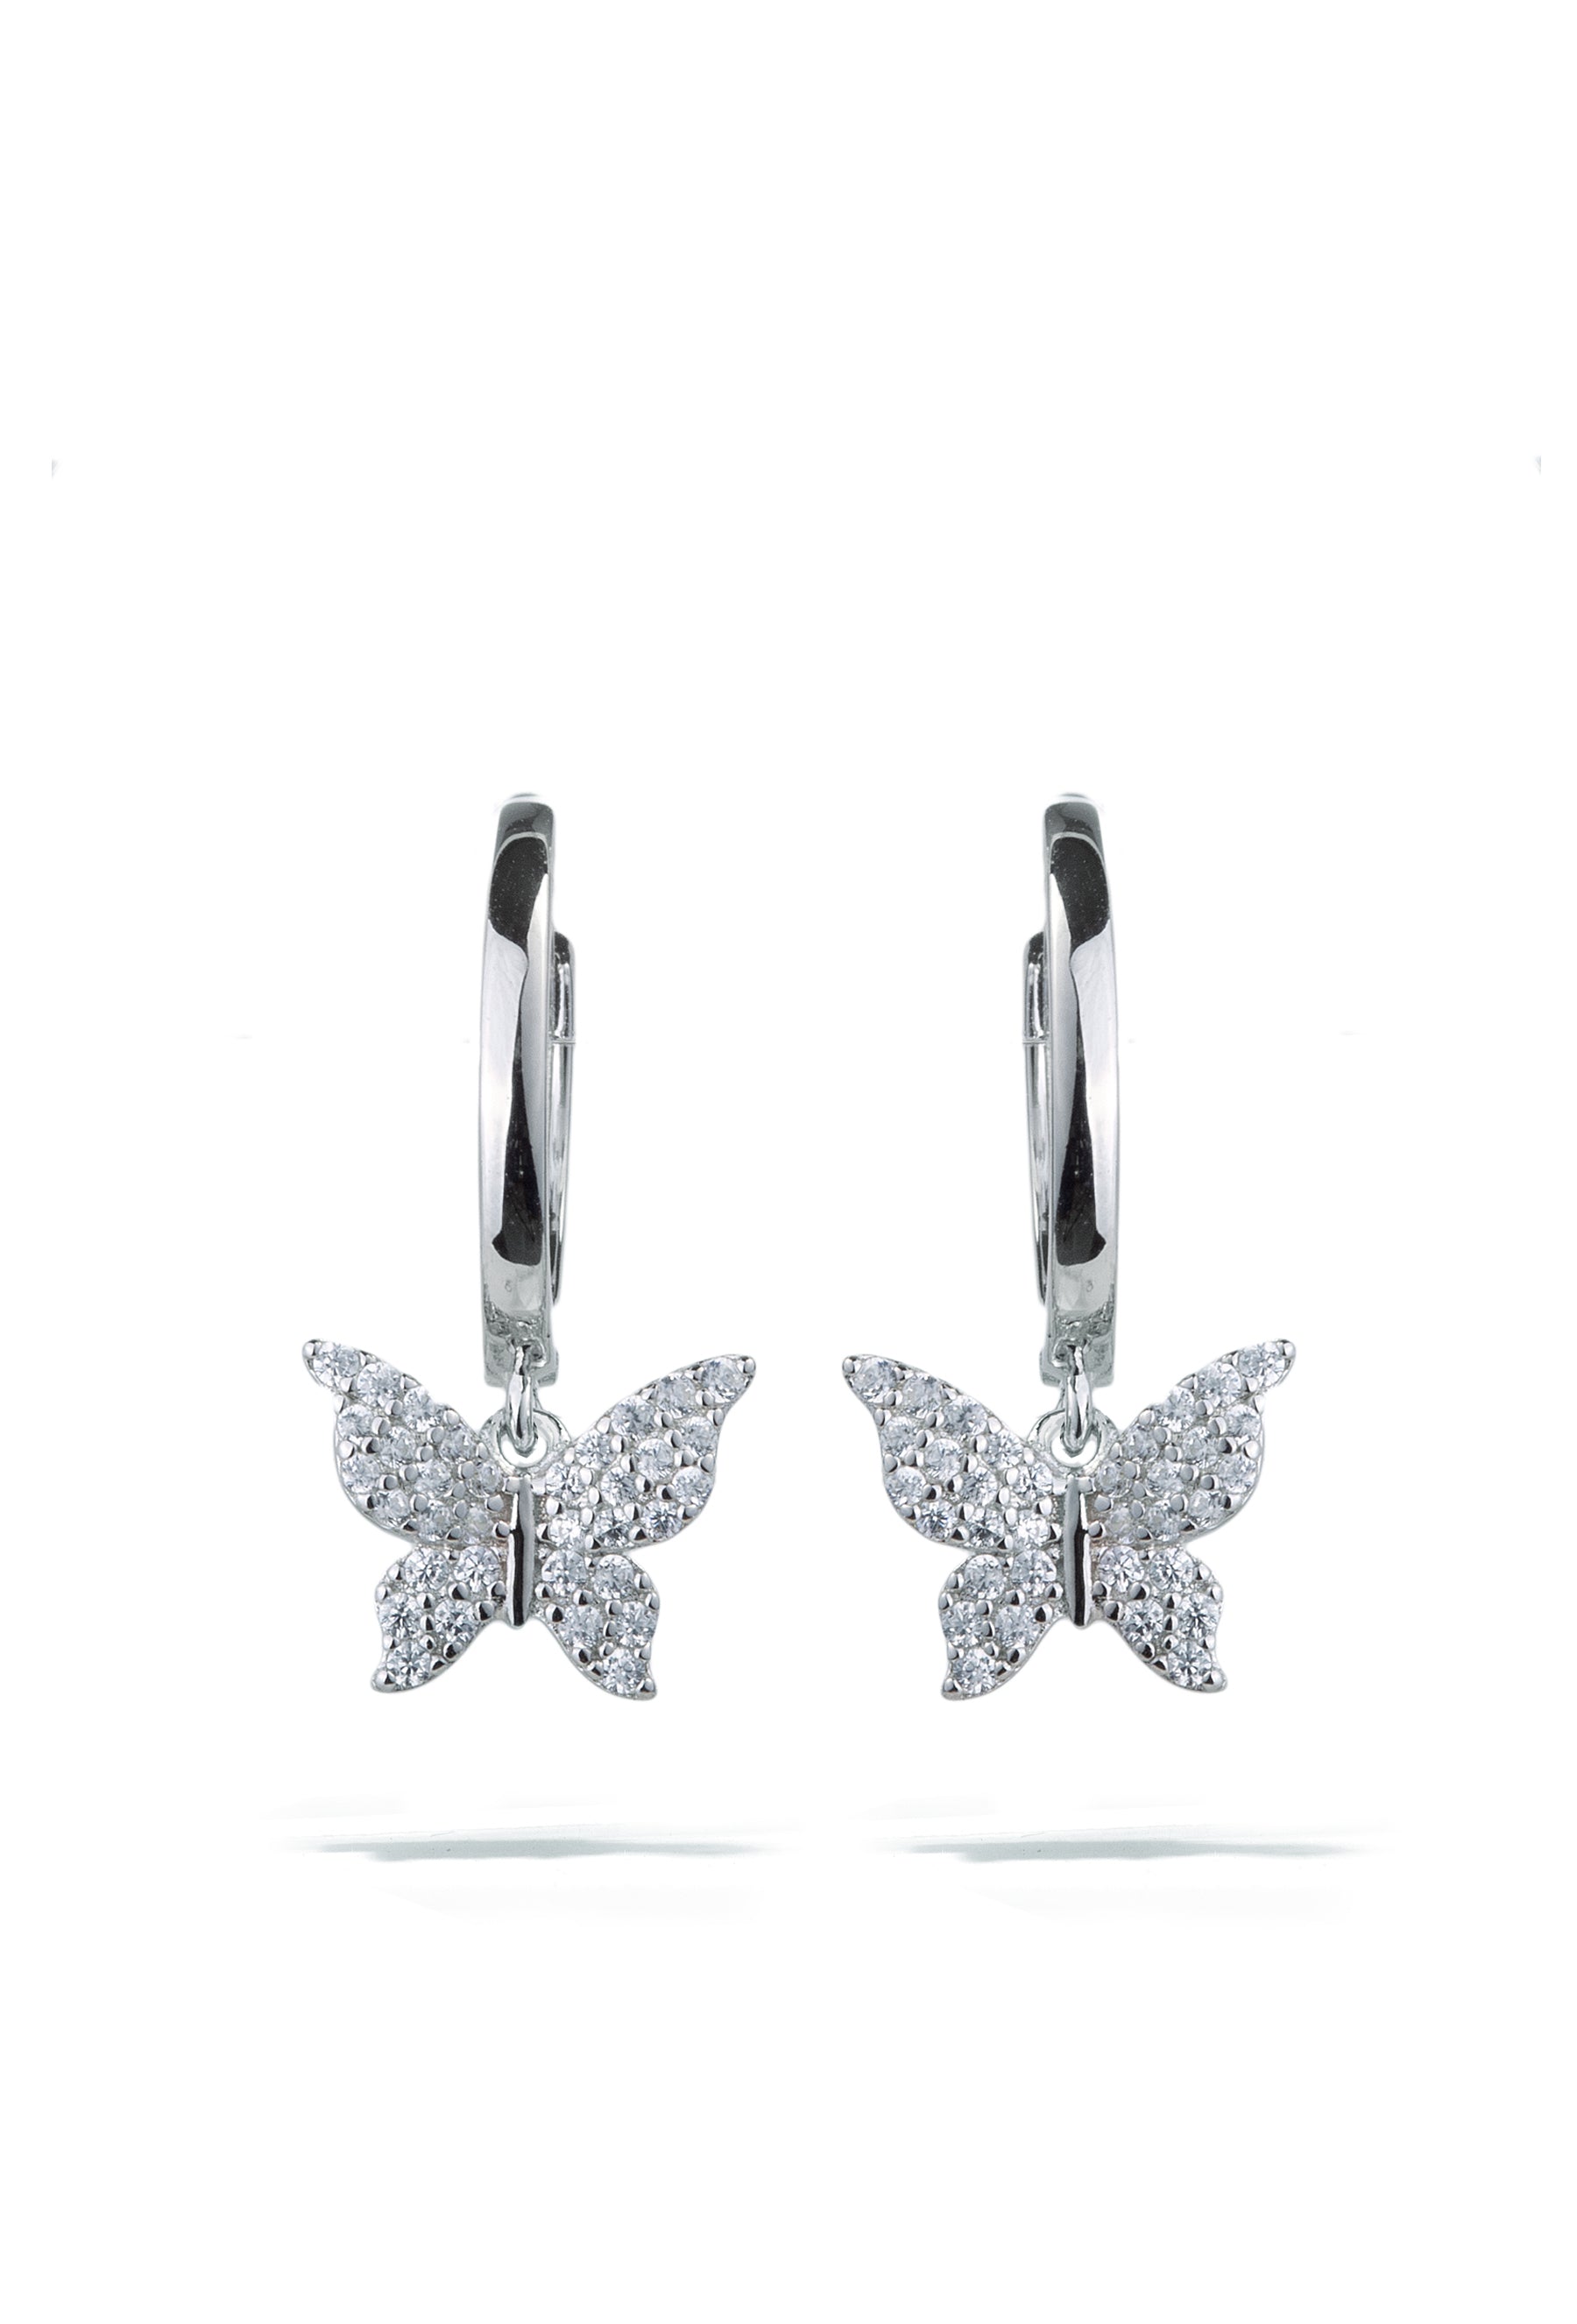 Sterling Silver Butterfly Stud Earrings from Thailand - Prophetic Wings |  NOVICA